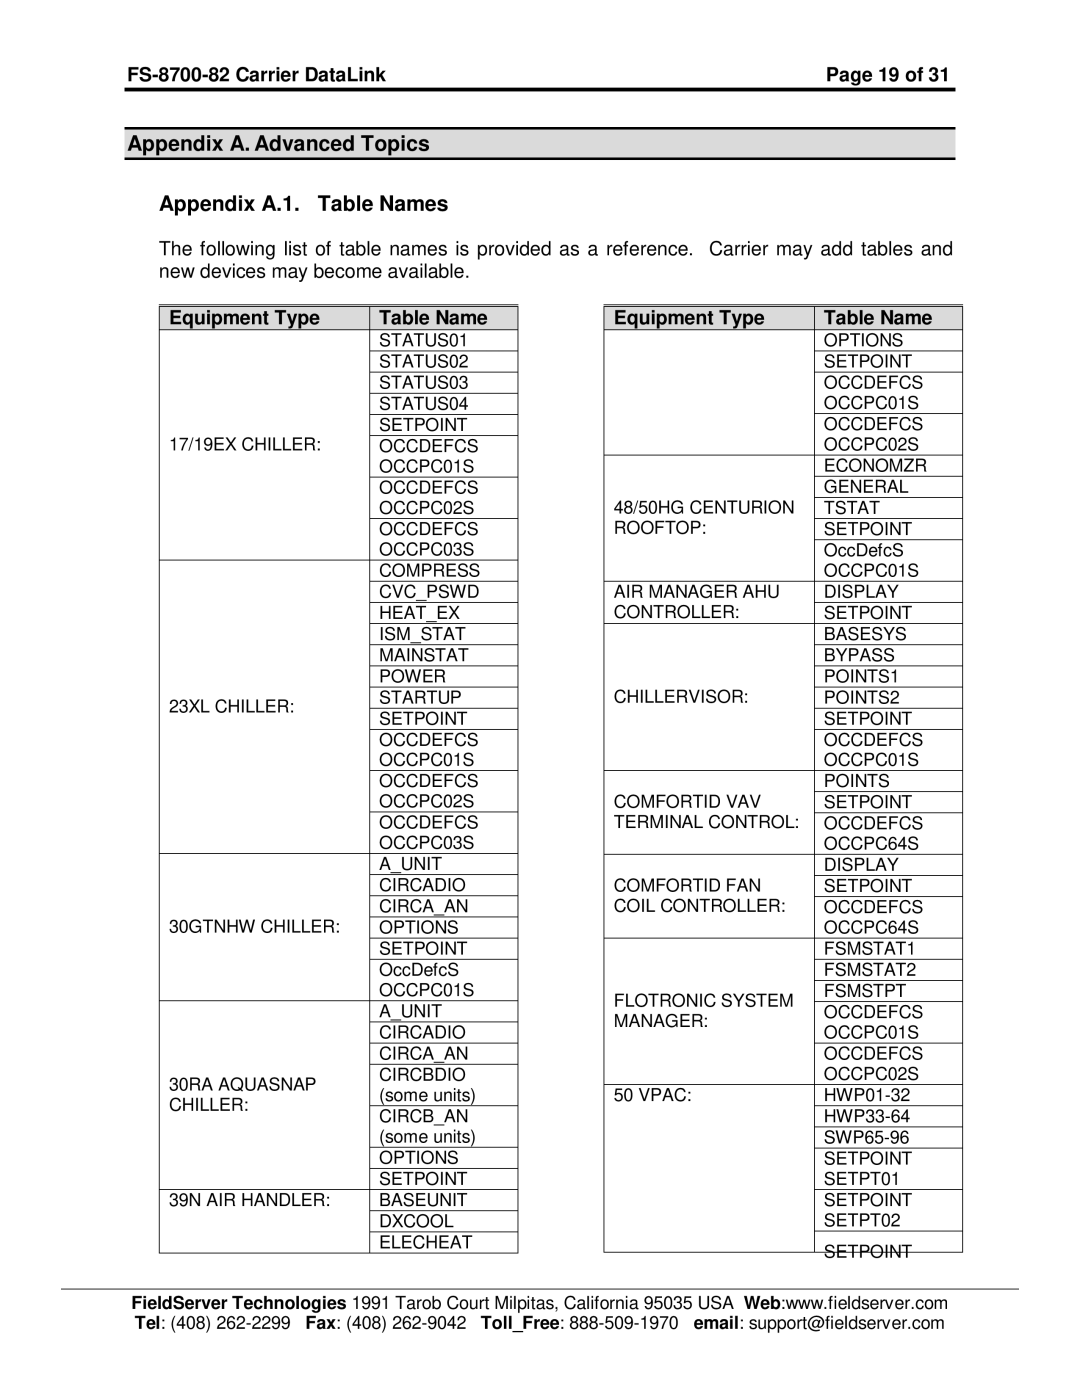 FieldServer FS-8700-82 instruction manual Appendix A. Advanced Topics Appendix A.1. Table Names, Equipment Type Table Name 